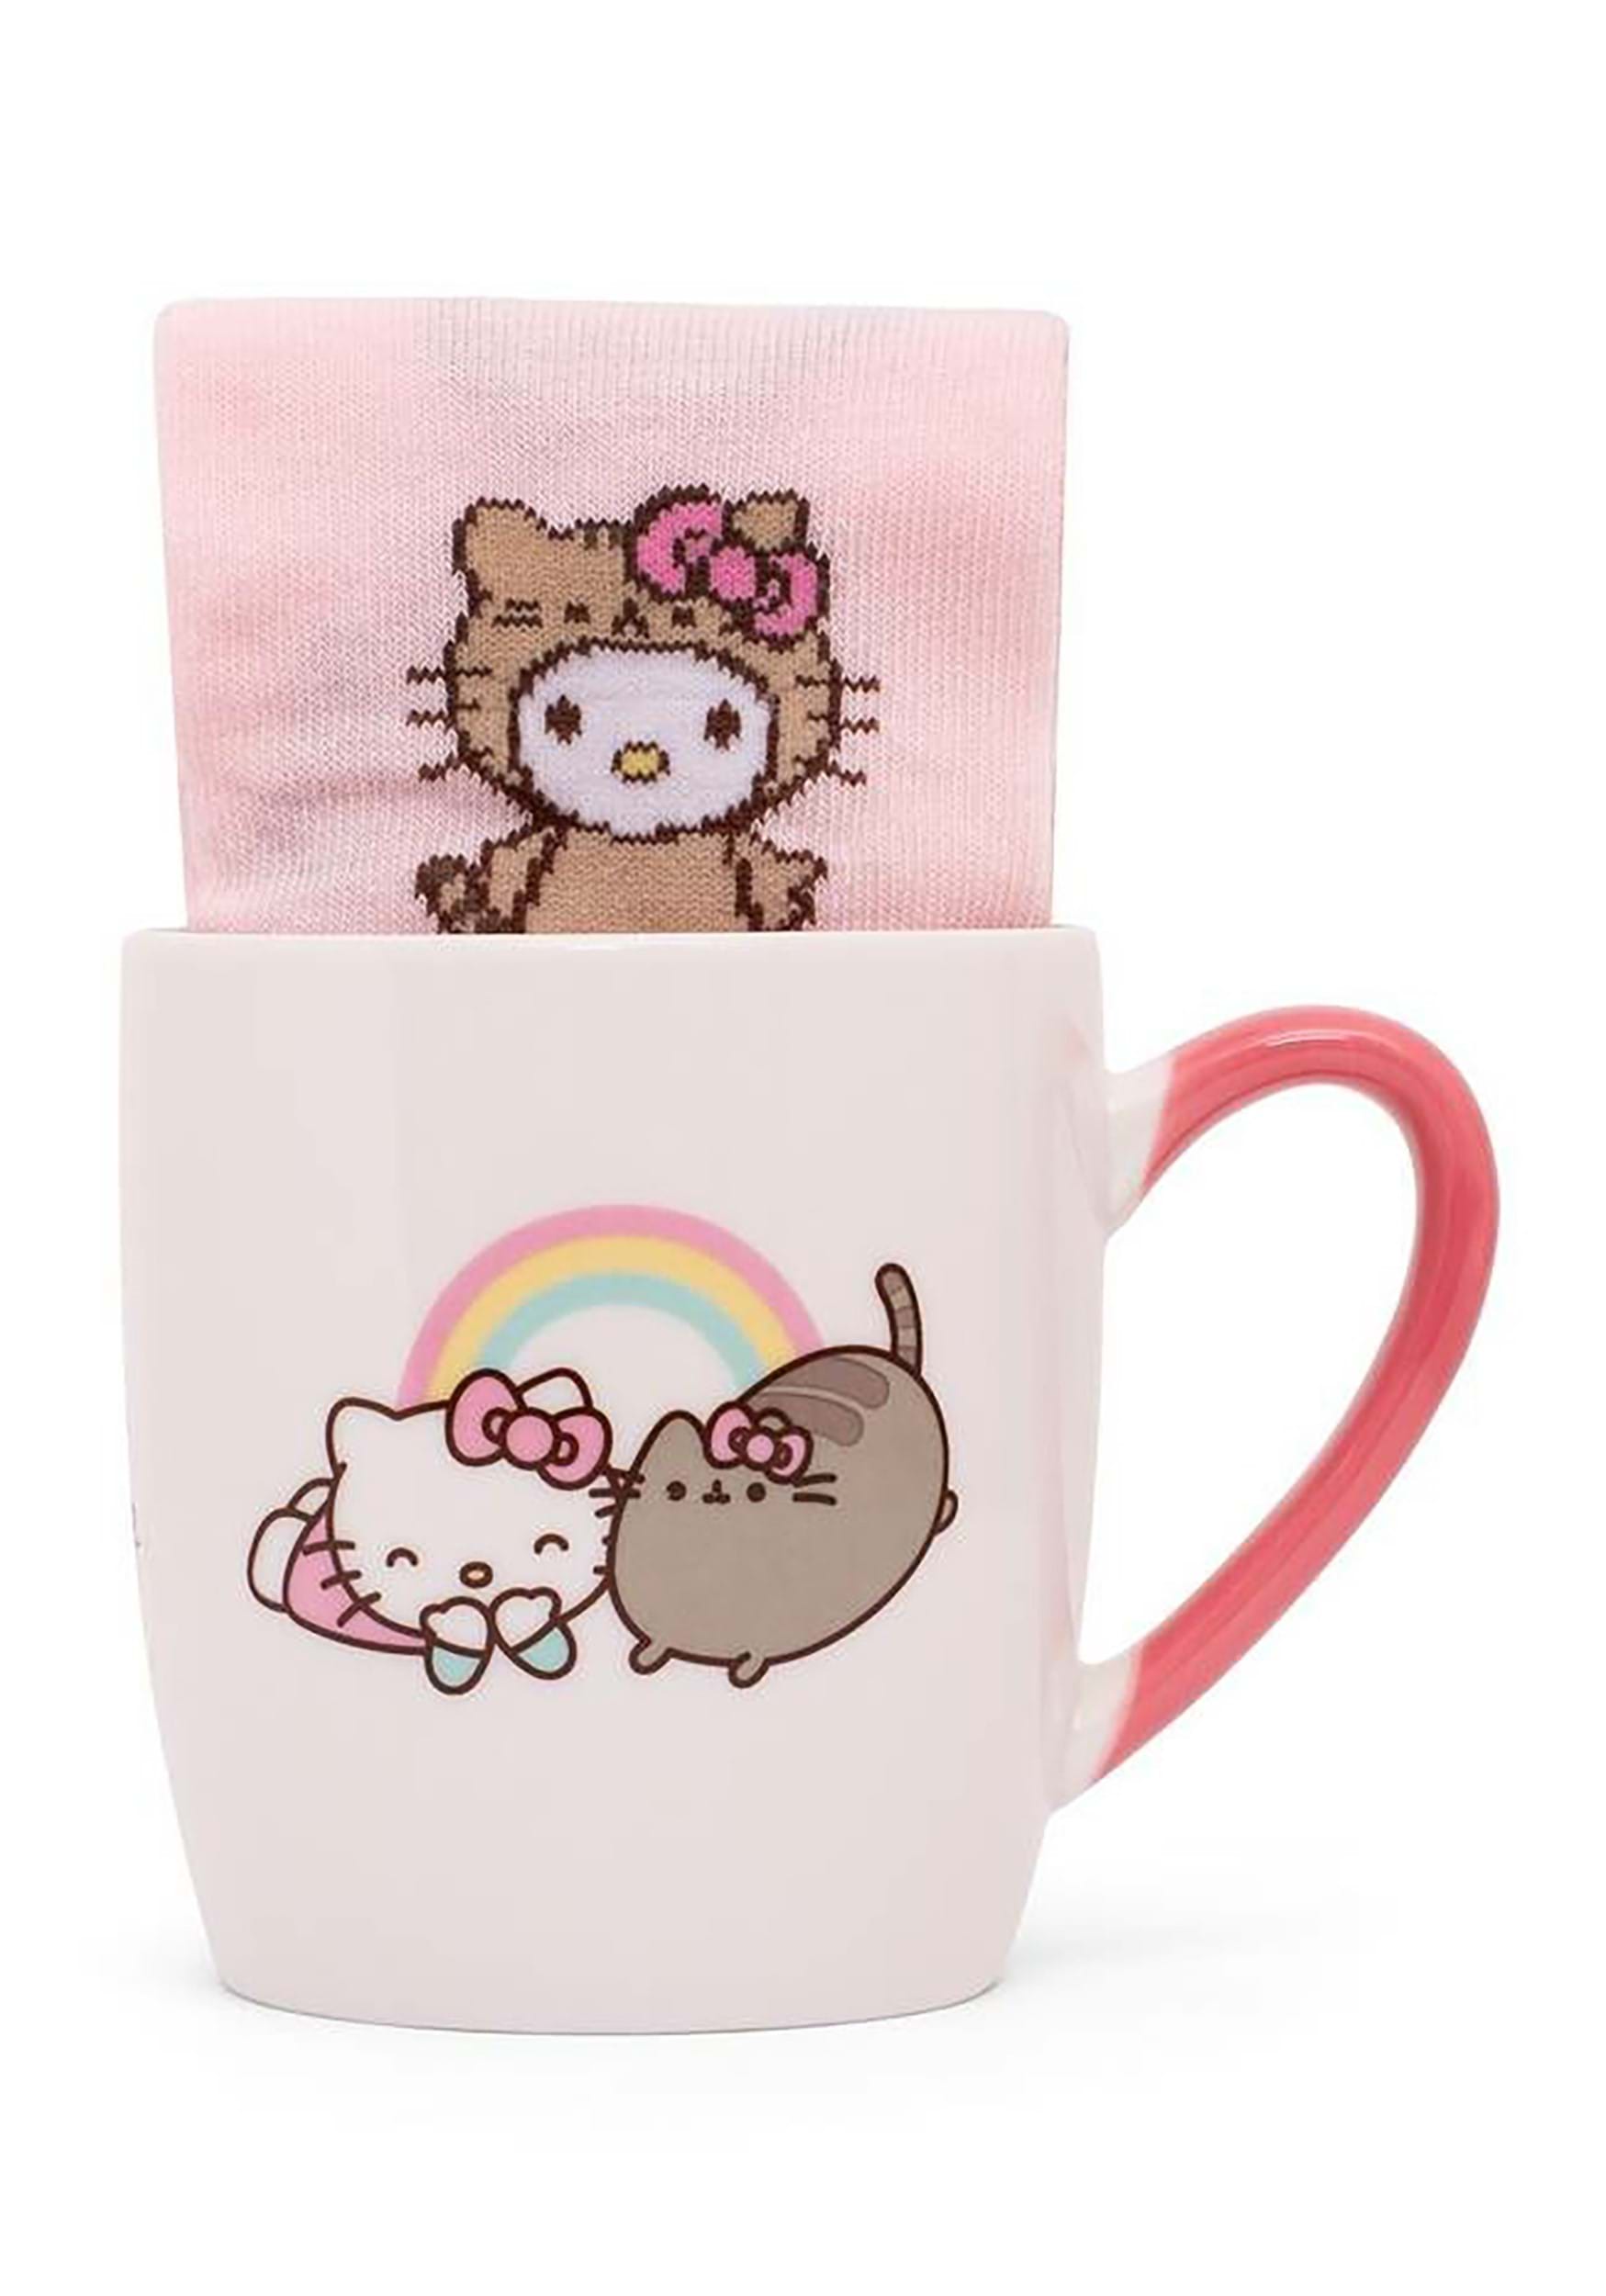 Official & Licensed **NEW** Pusheen Cartoon Cat Character Coffee Tea Mug 